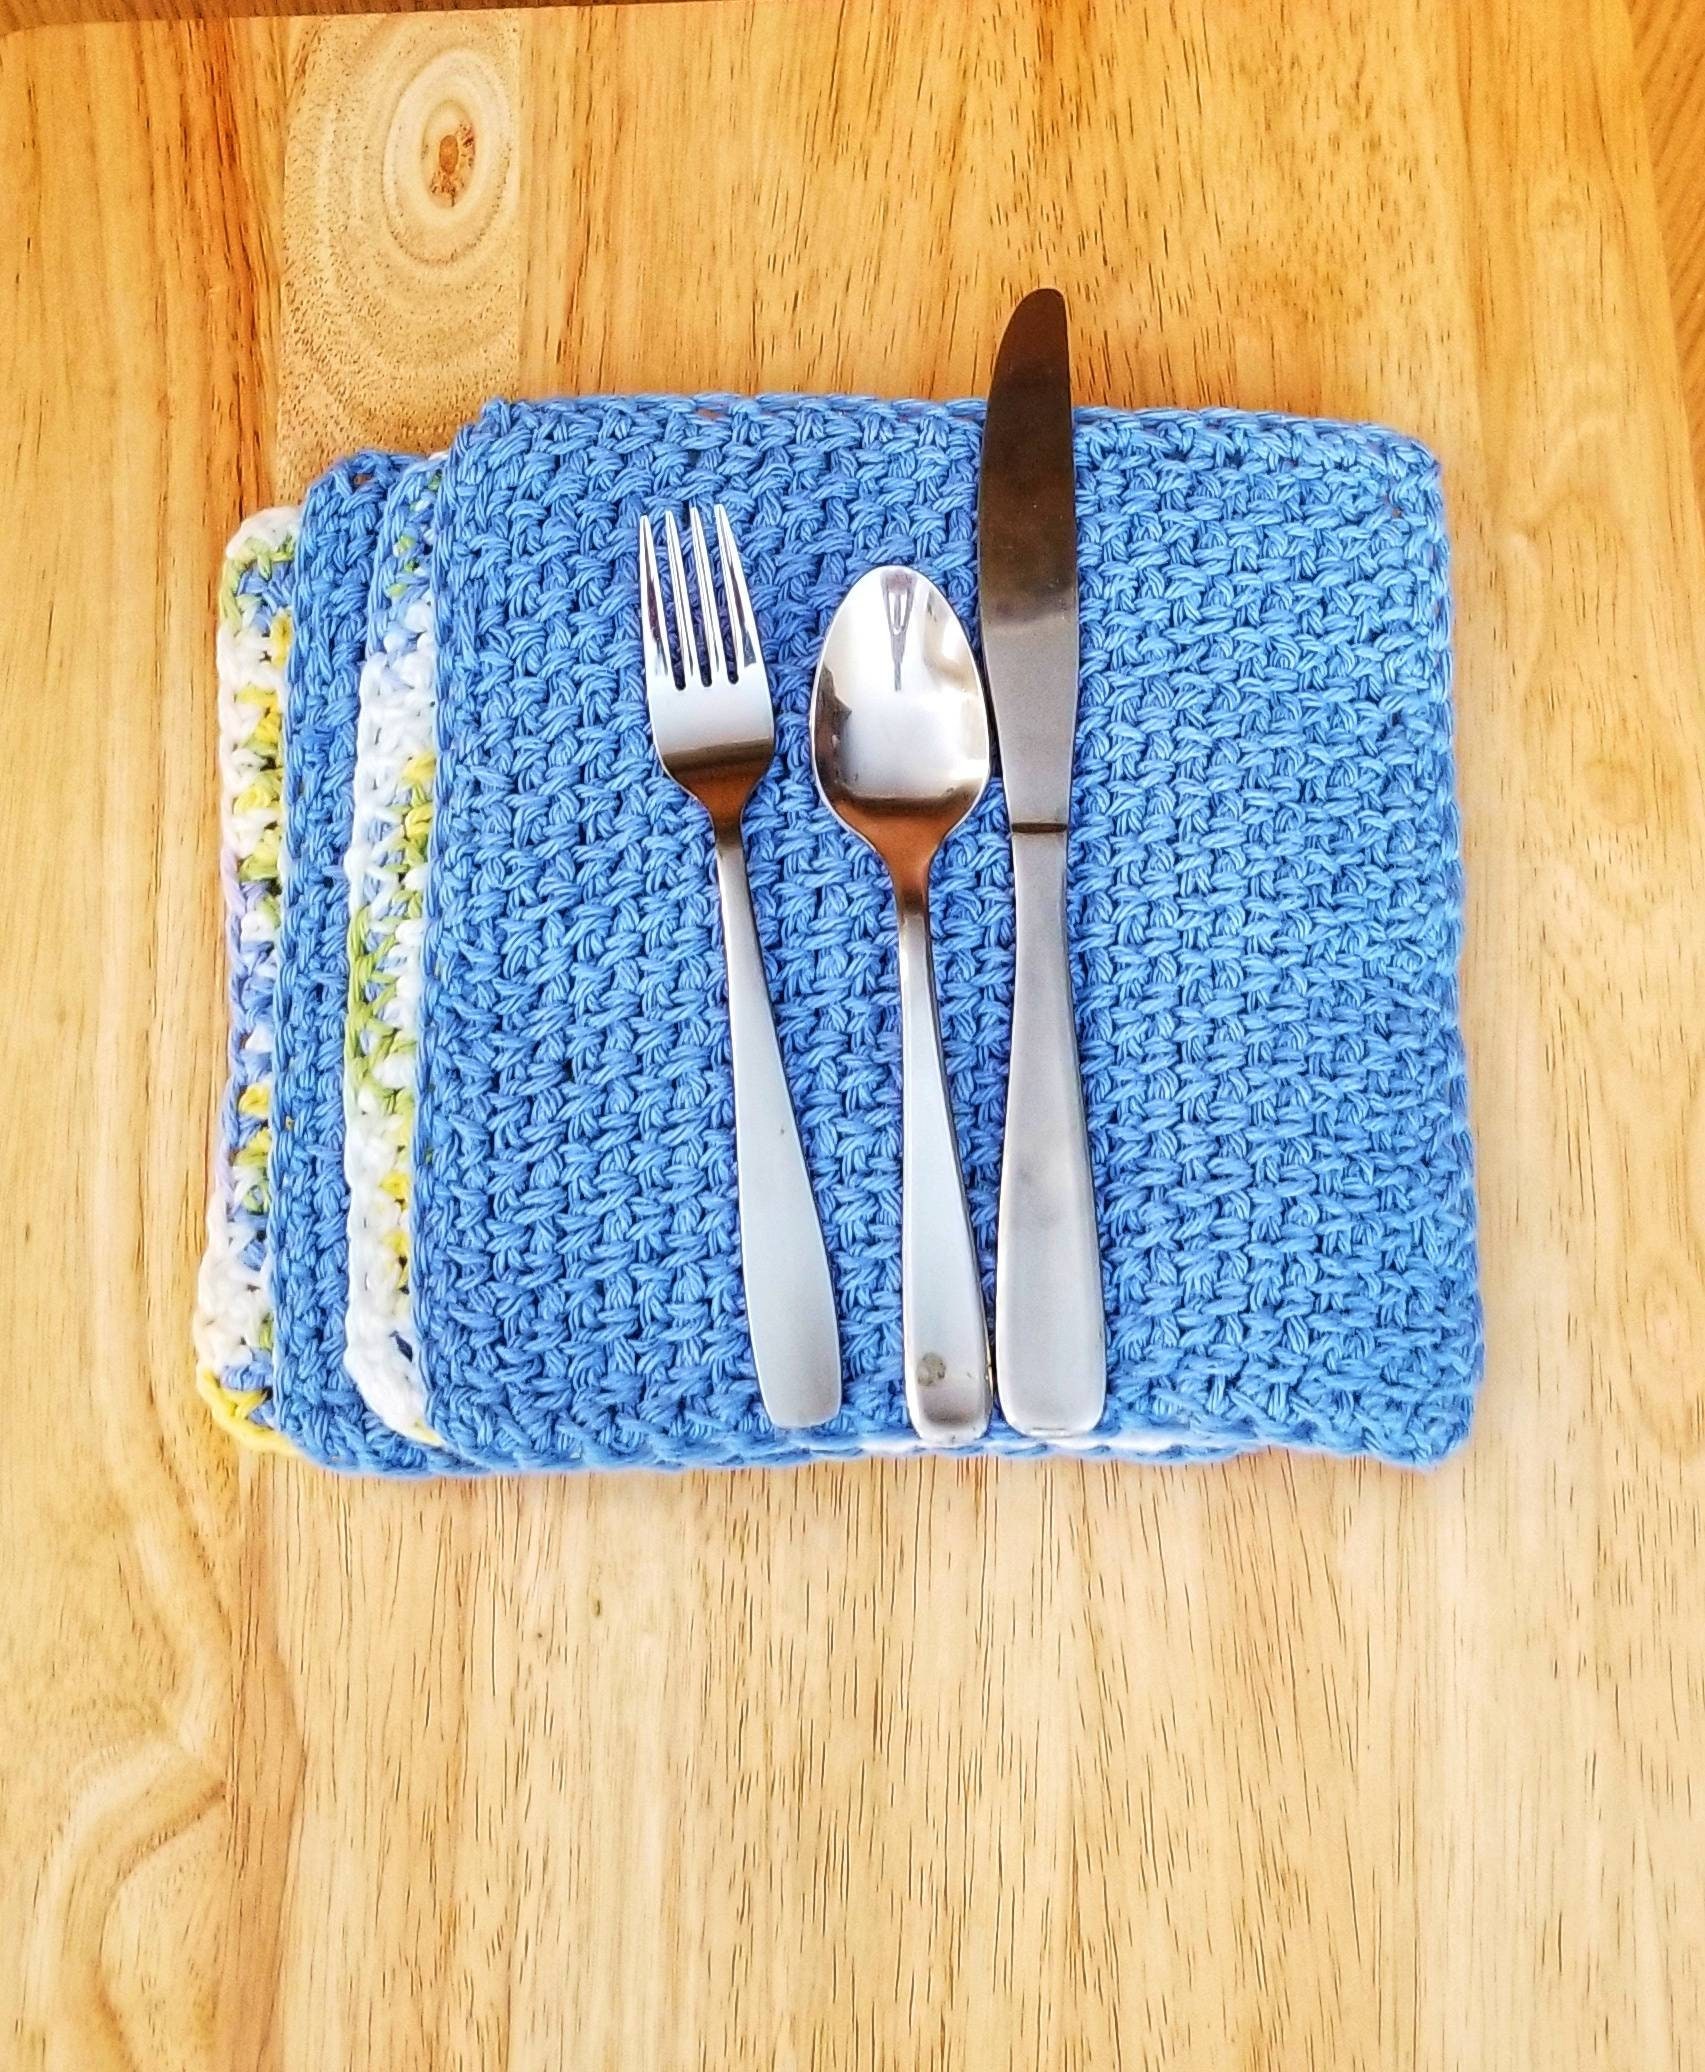 Home & Living :: Kitchen & Dining :: Linens :: Kitchen Linens :: Dishcloths  & Towels :: Crochet Dishcloths, Cotton Washcloths, Kitchen Towels, Dishcloth Set, Eco-Friendly, Modern Kitchen Decor, Choice of Sets